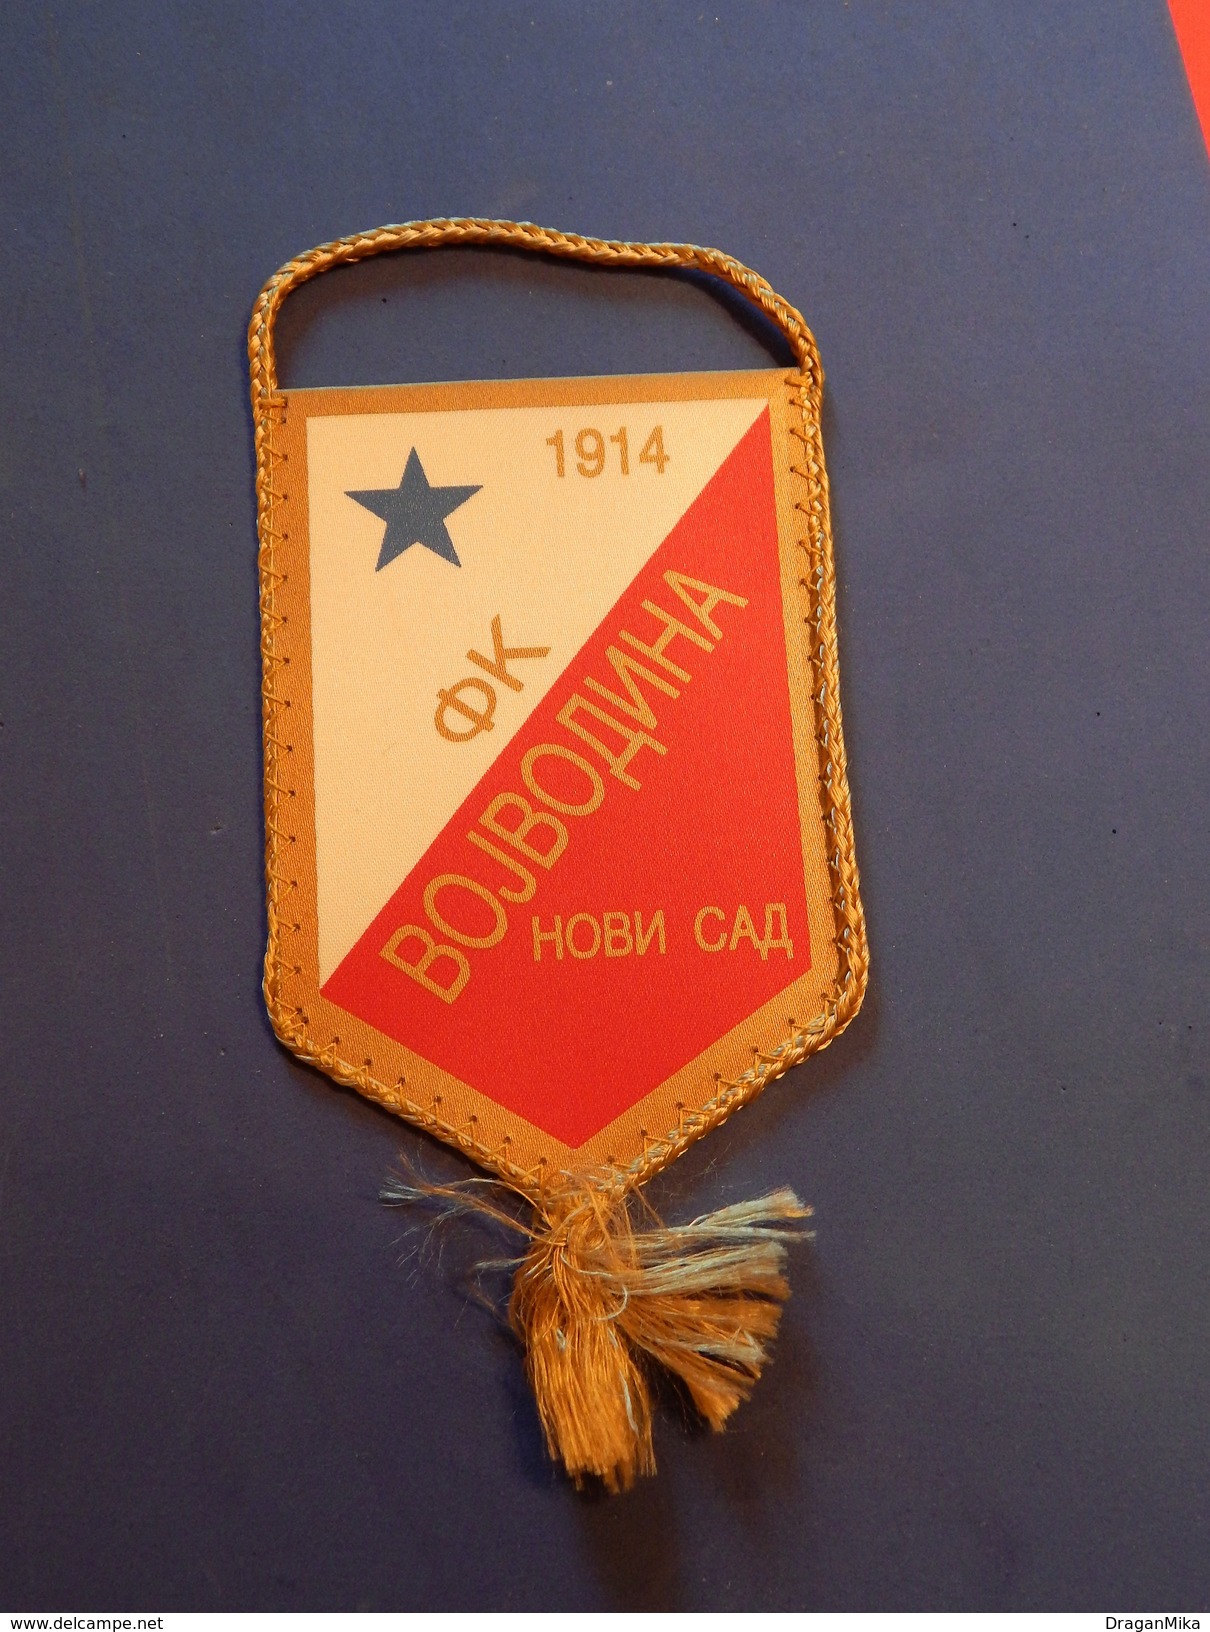 The Old Flag Football Club Vojvodina, Novi Sad, Yugoslavia, 2 - Apparel, Souvenirs & Other